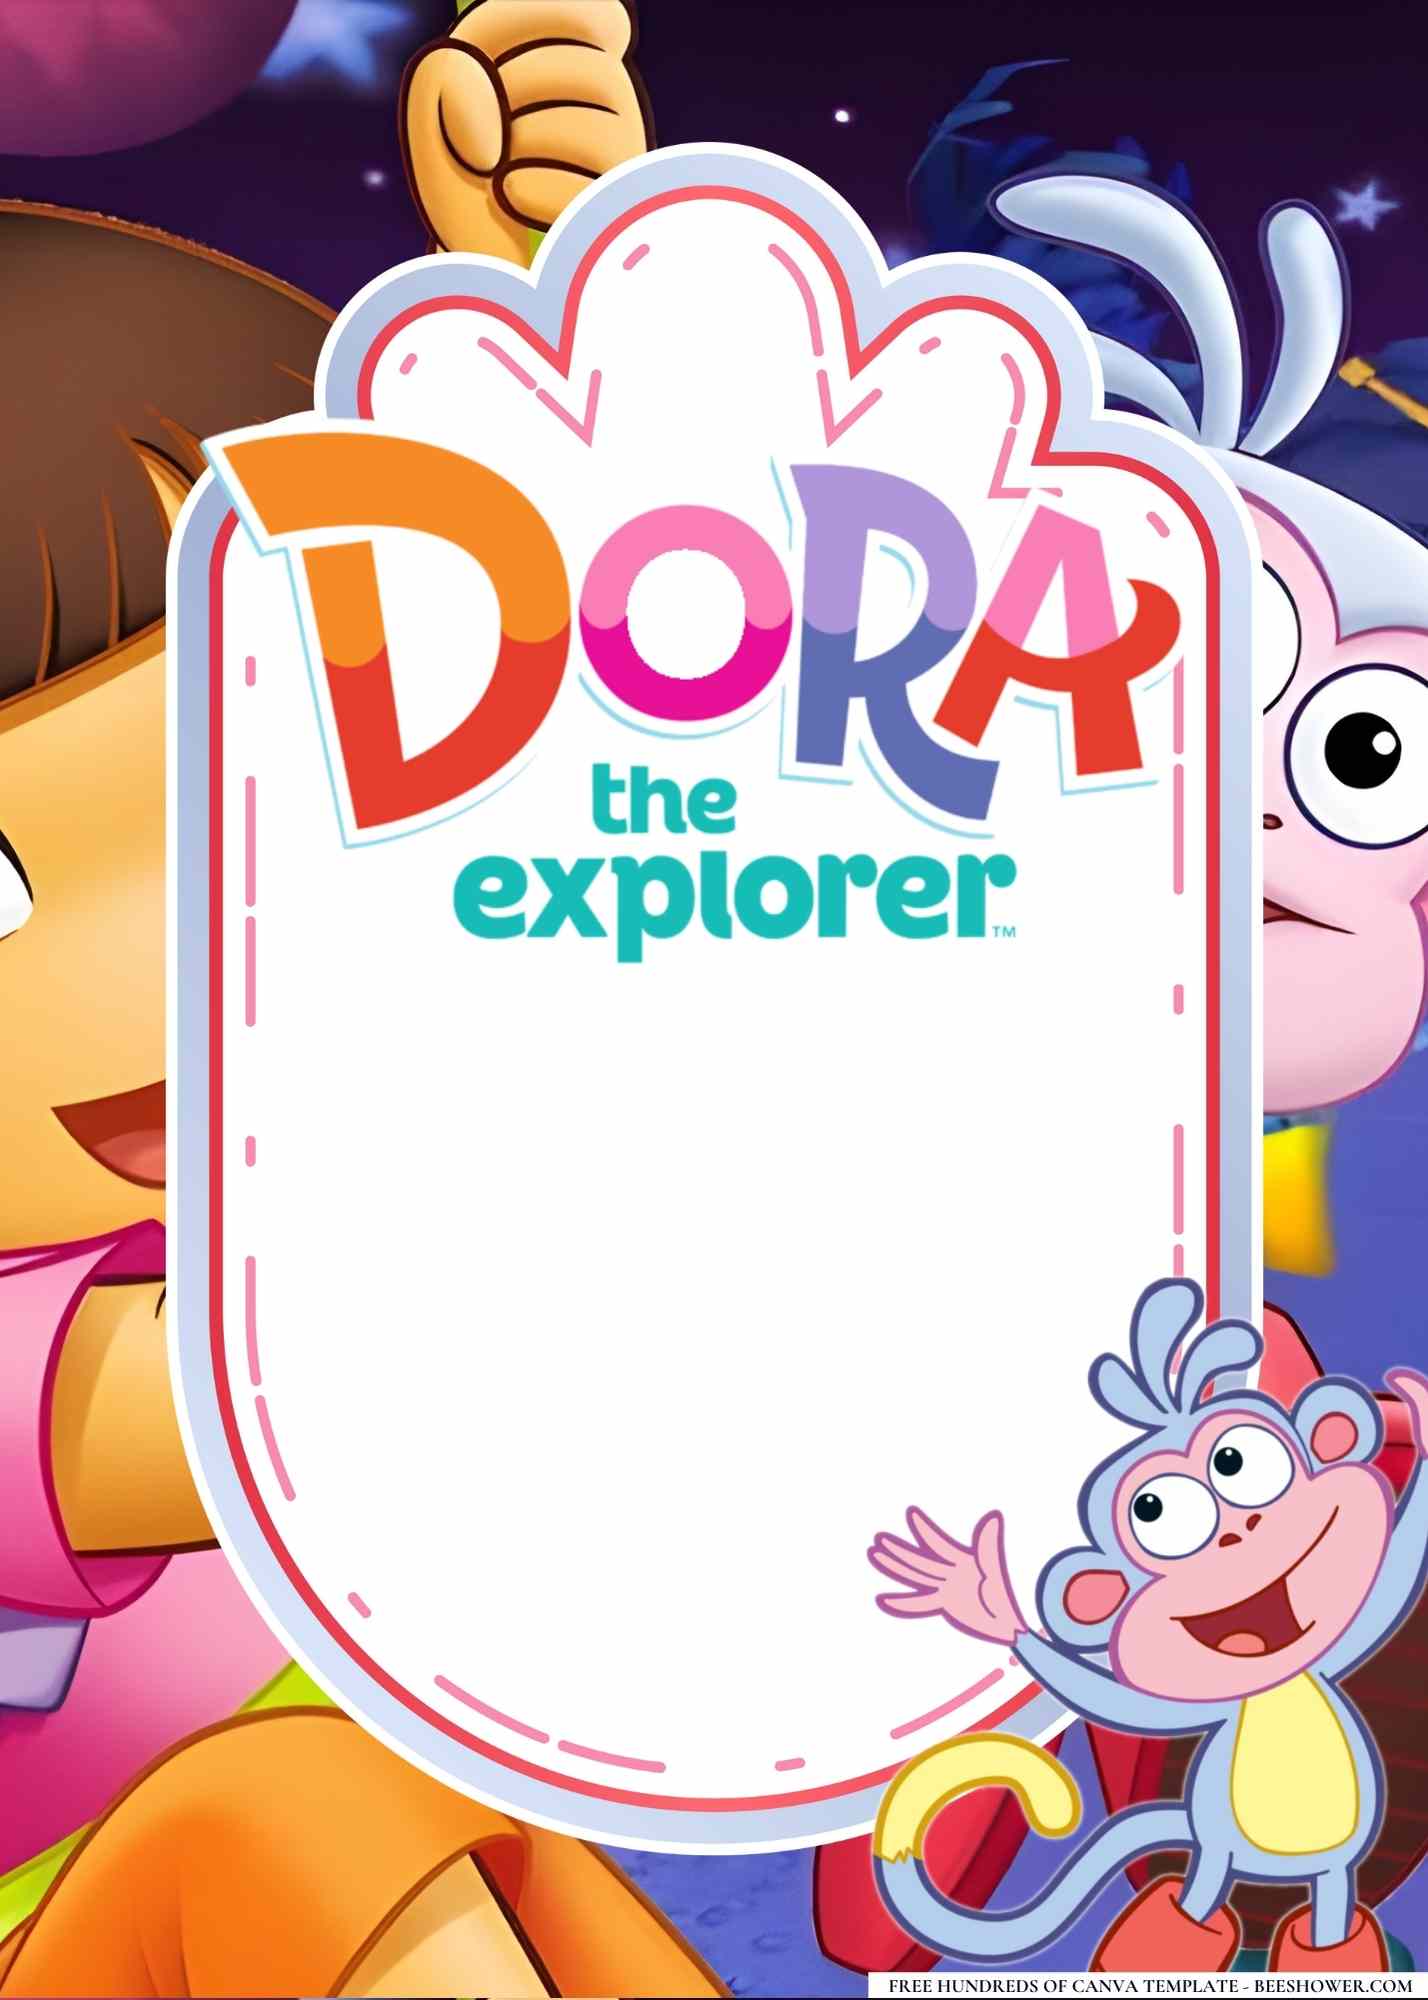 Boots (Dora the Explorer) Baby Shower Invitation